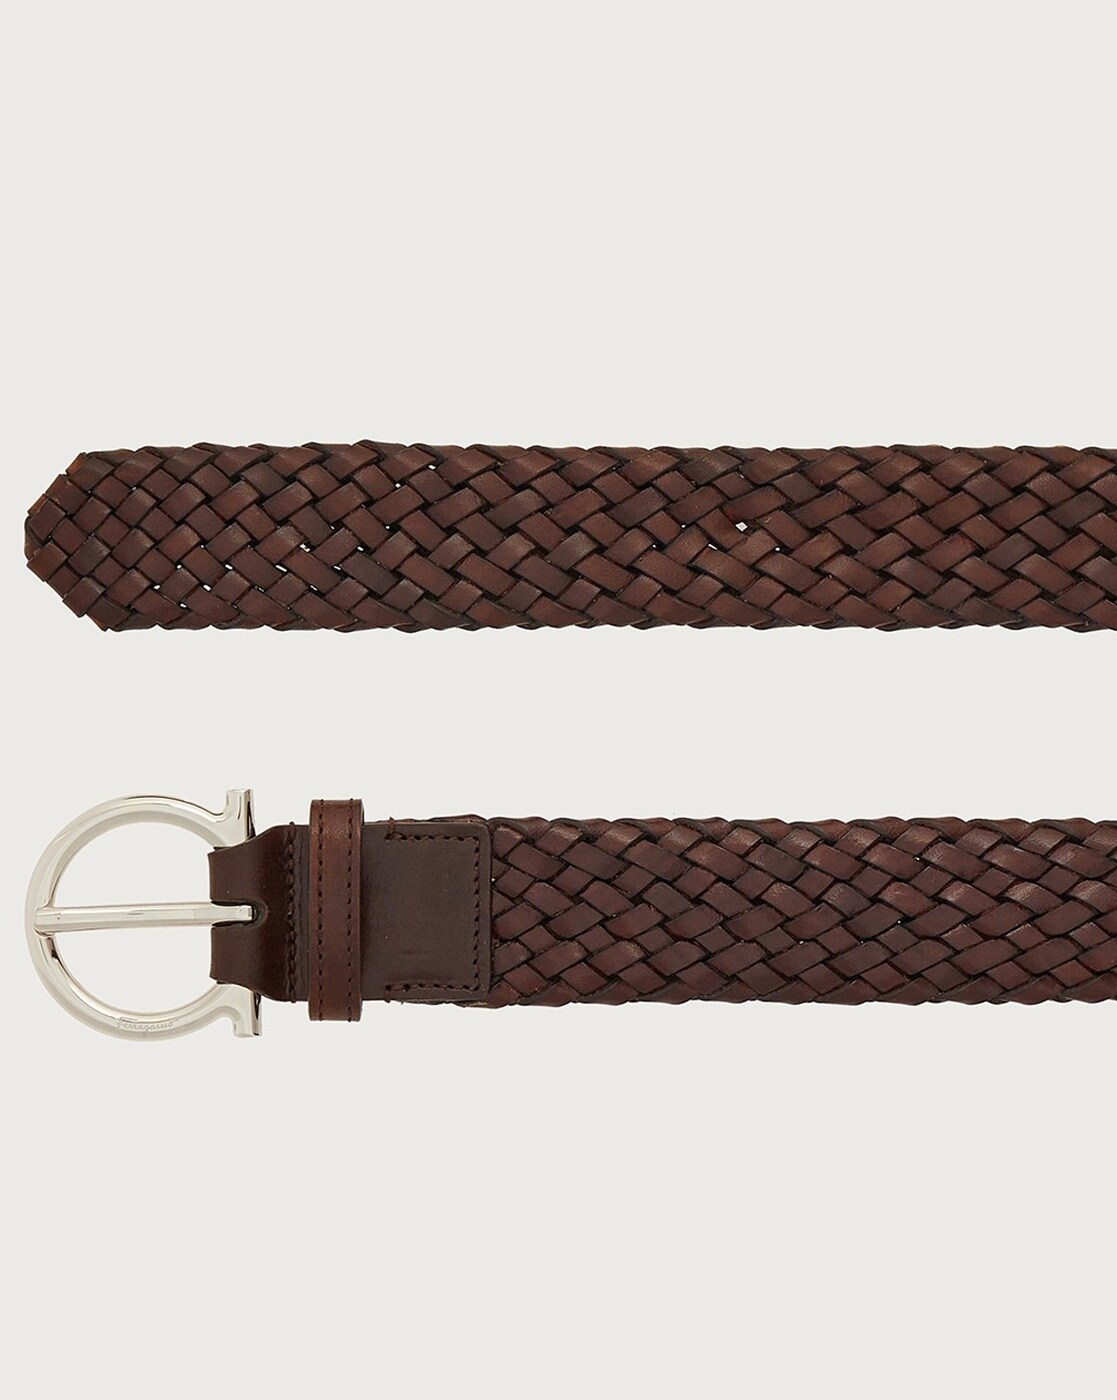 Shop authentic Salvatore Ferragamo Gancini Leather Belt at revogue for just  USD 255.00